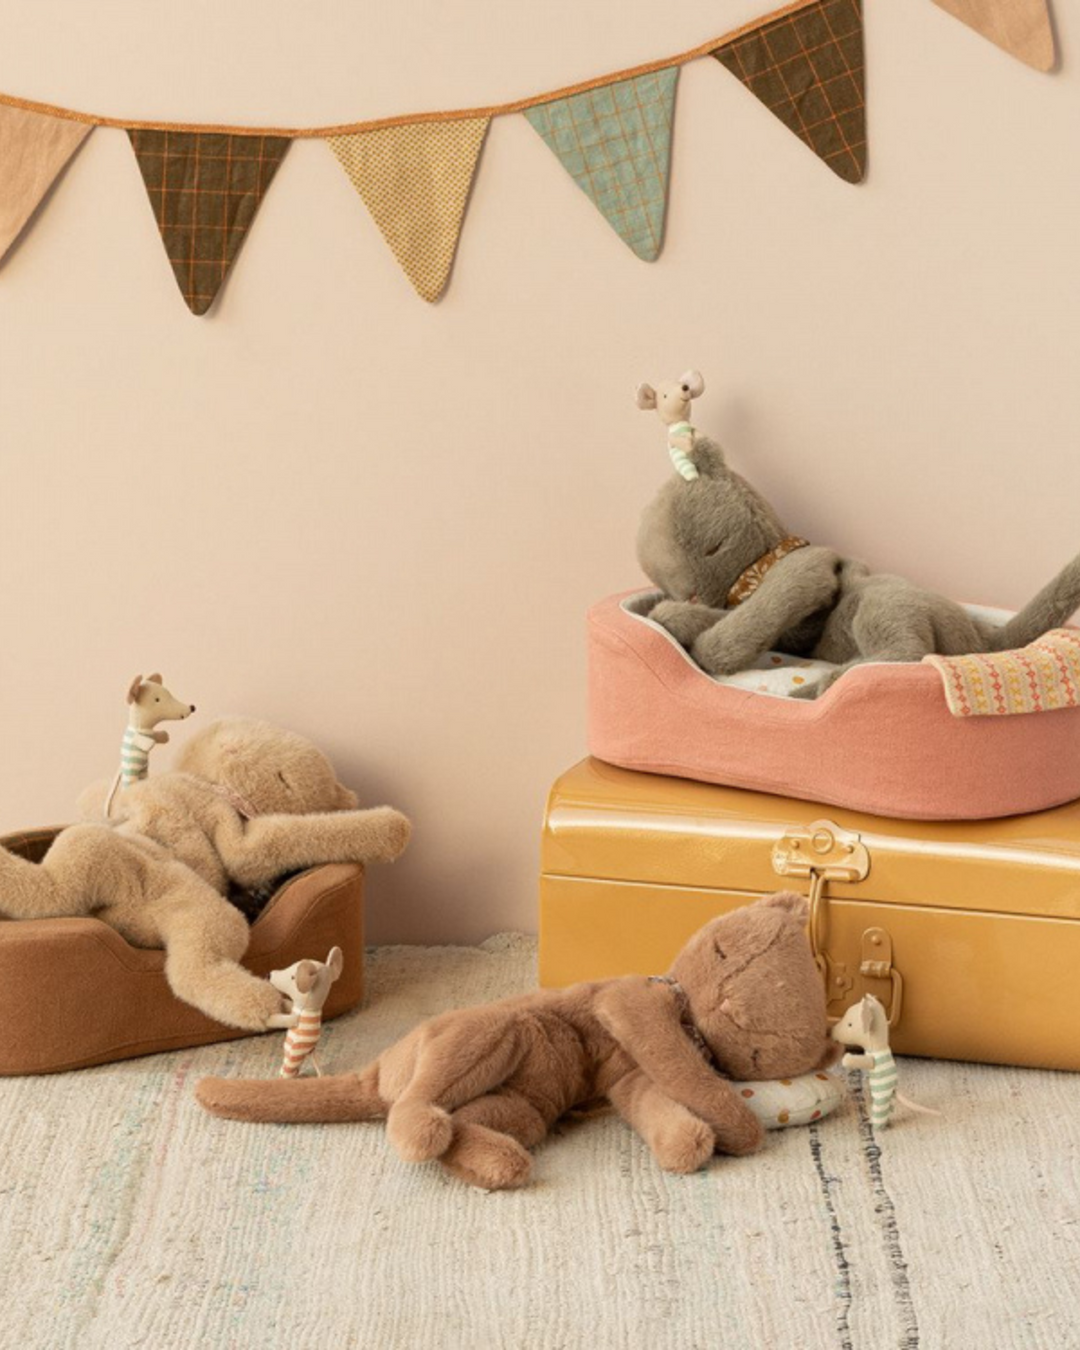 Maileg Kitten Plush Toy - Nougat: Snuggle Companion Extraordinaire